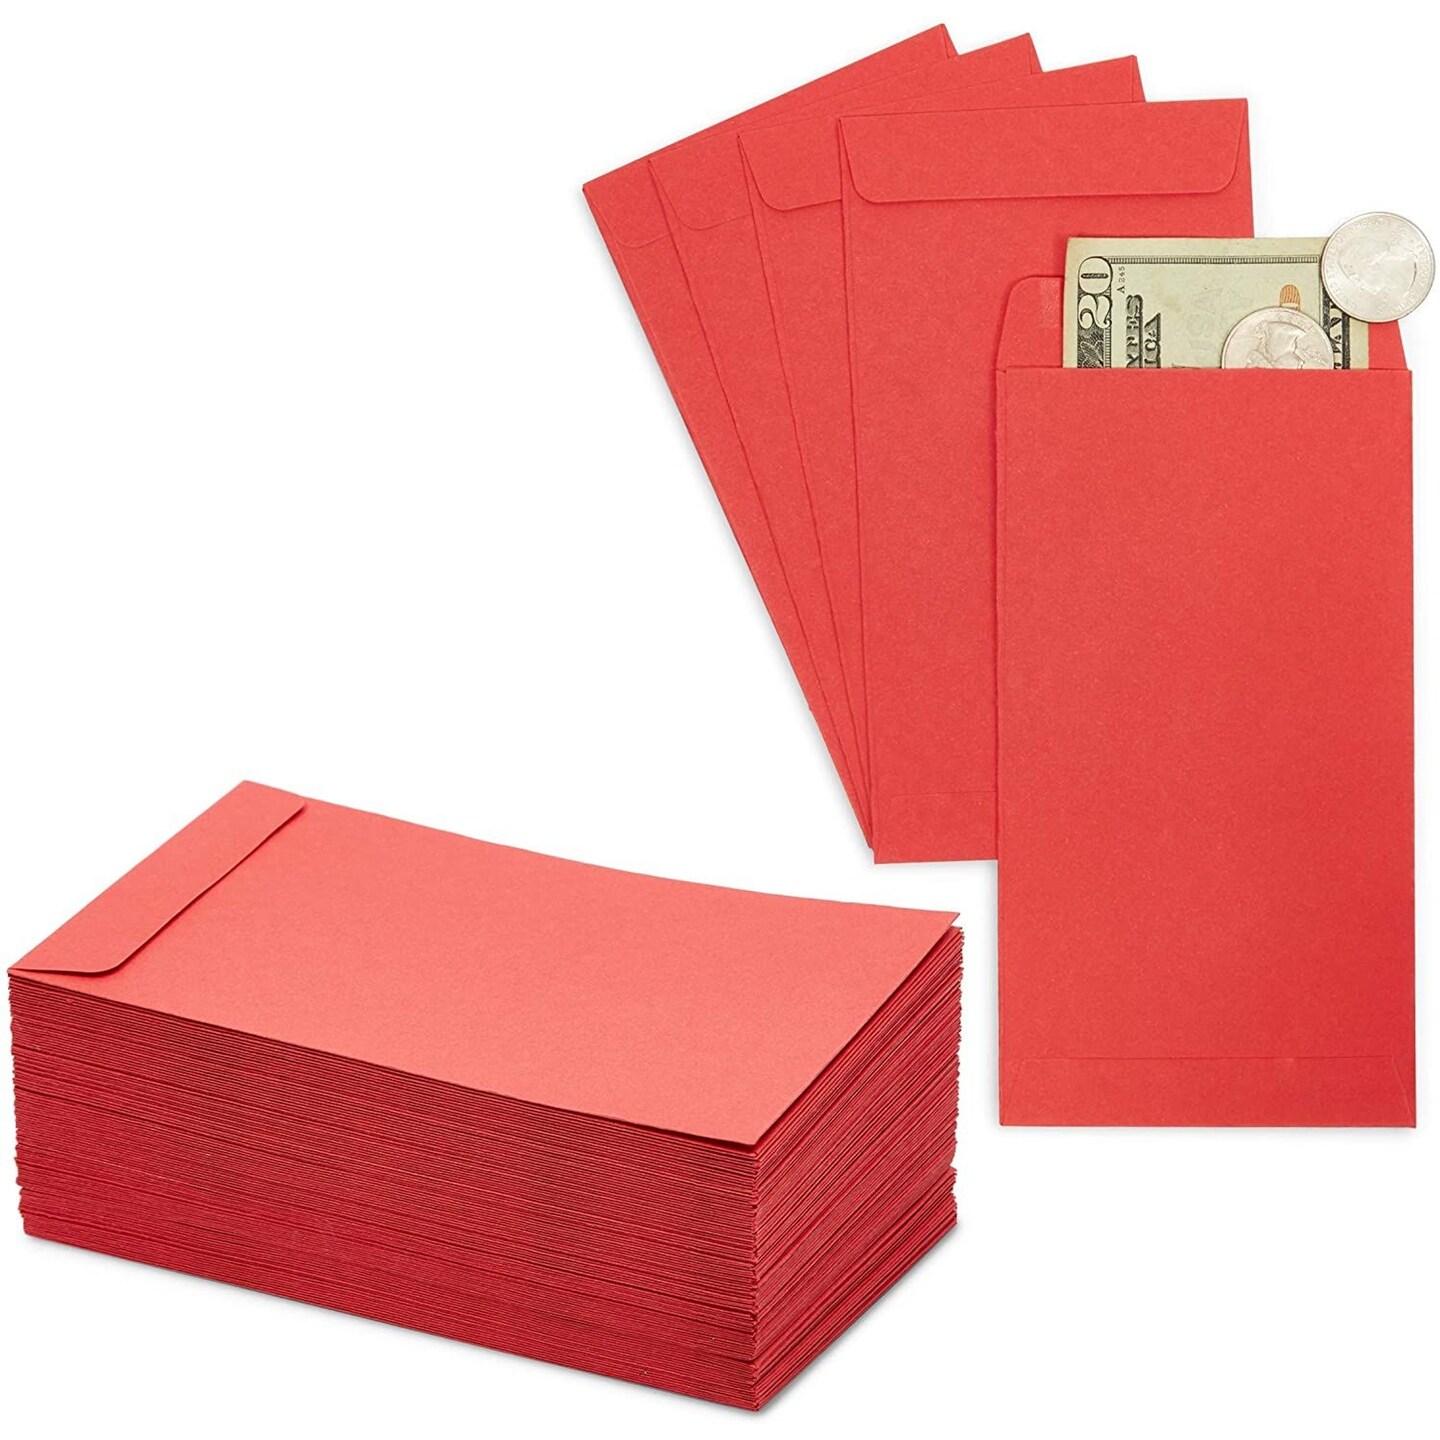  100 Pack Small Coin Envelopes Self-Adhesive Kraft